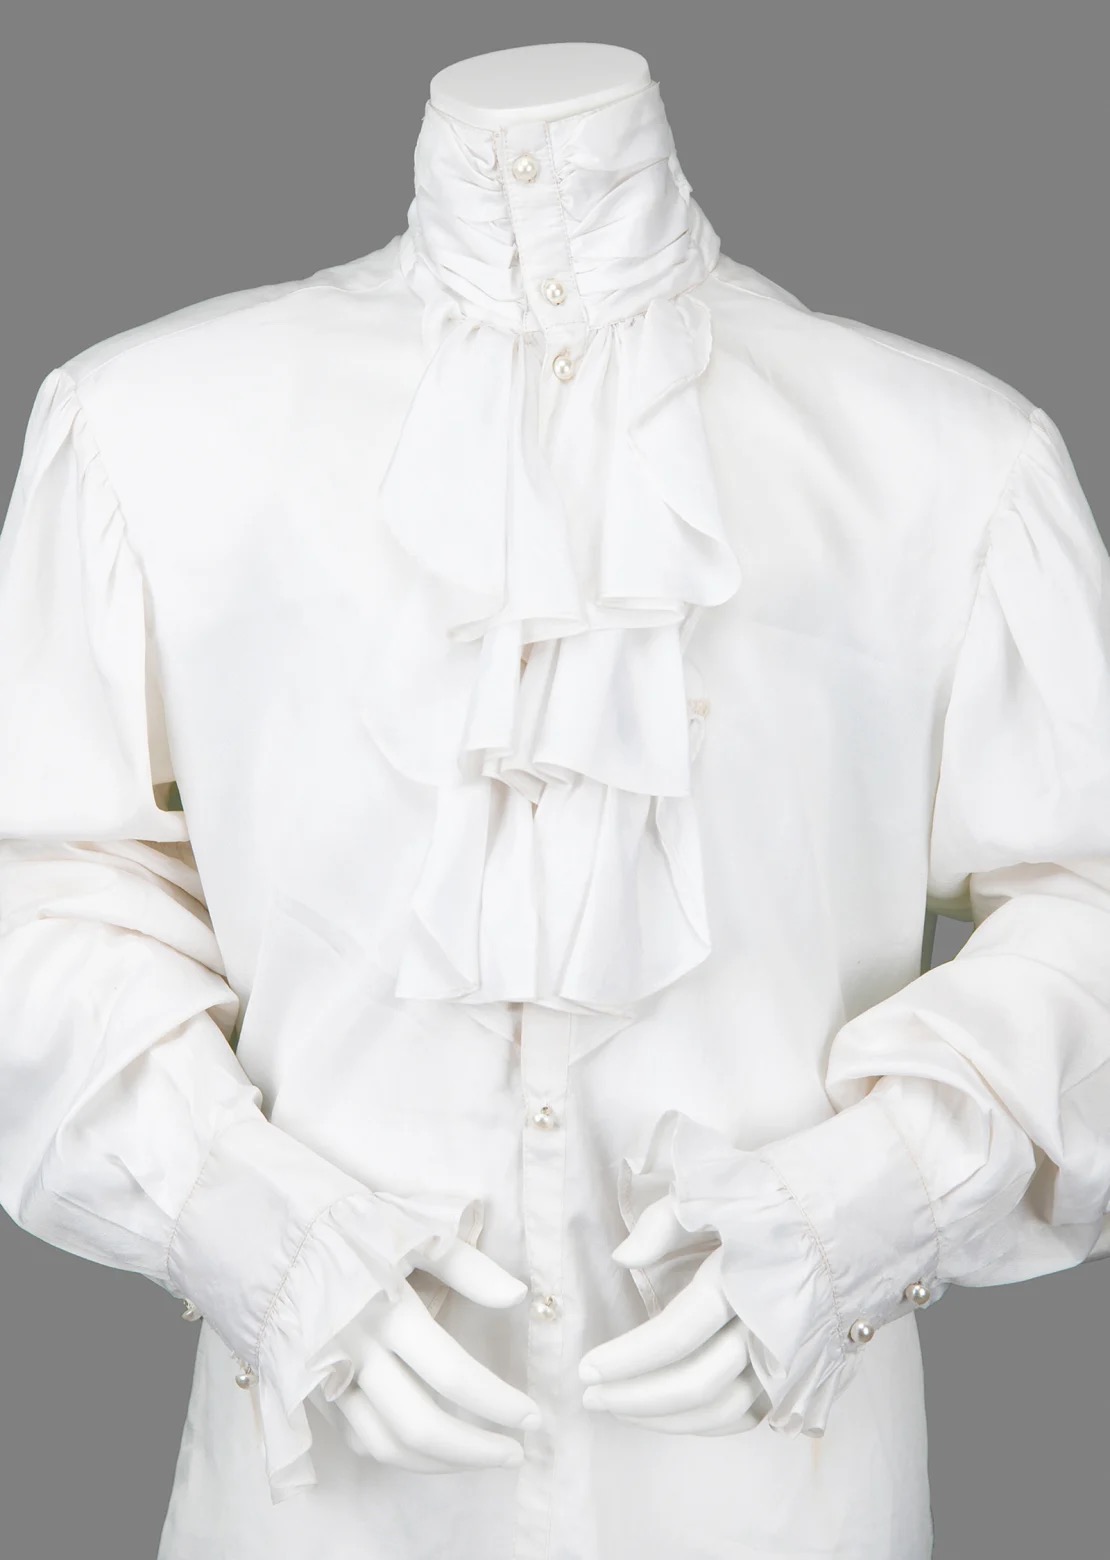 Chiếc áo sơ mi của cố ca sĩ Prince được bán đấu giá 15.000 USD 2